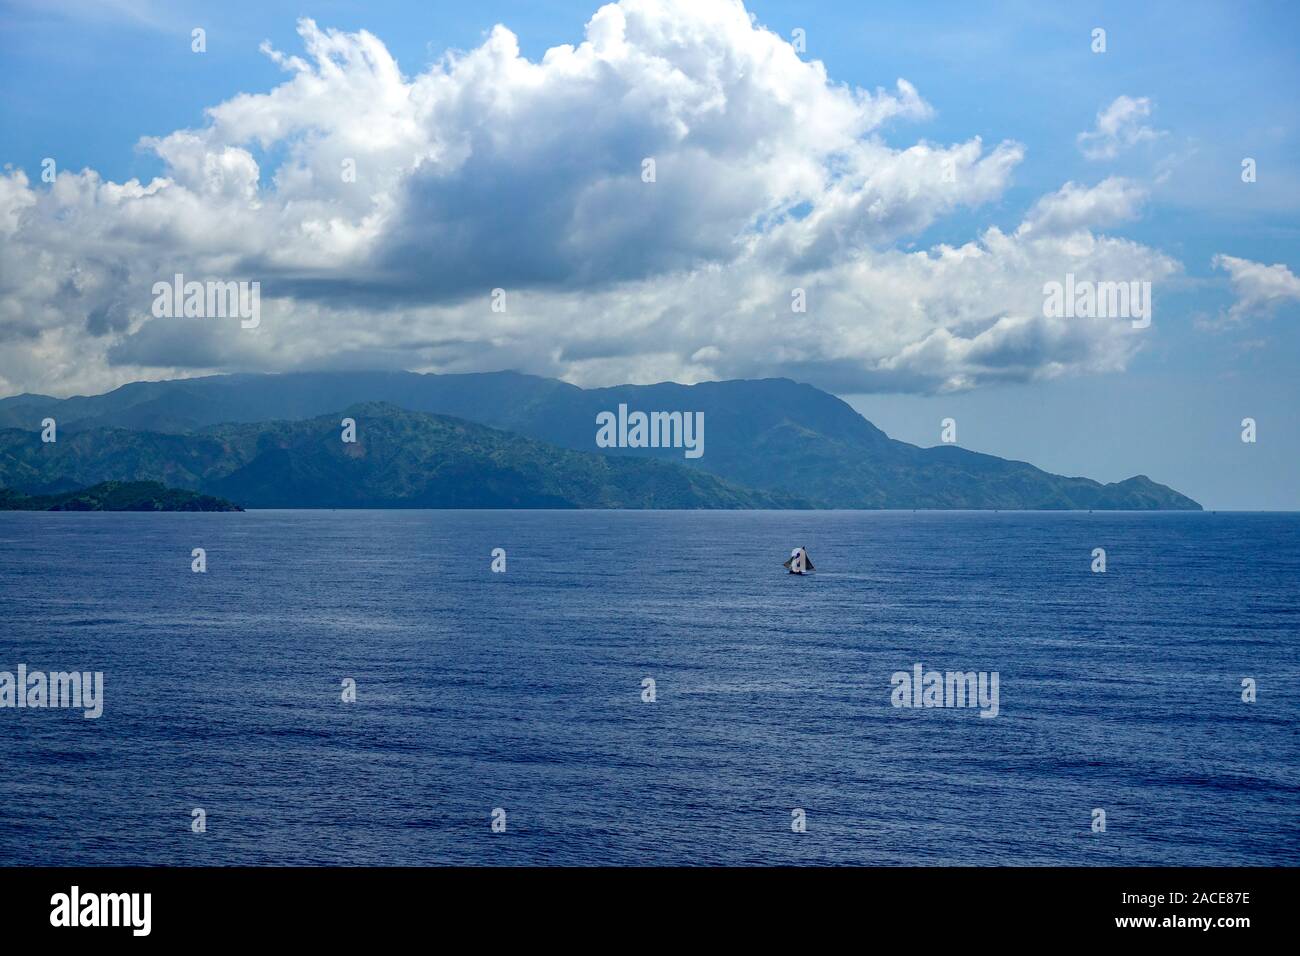 haiti-11/1/19: The hazy and mountainous coastline of the Caribbean Island of Haiti as a cruise ship sails by. Stock Photo